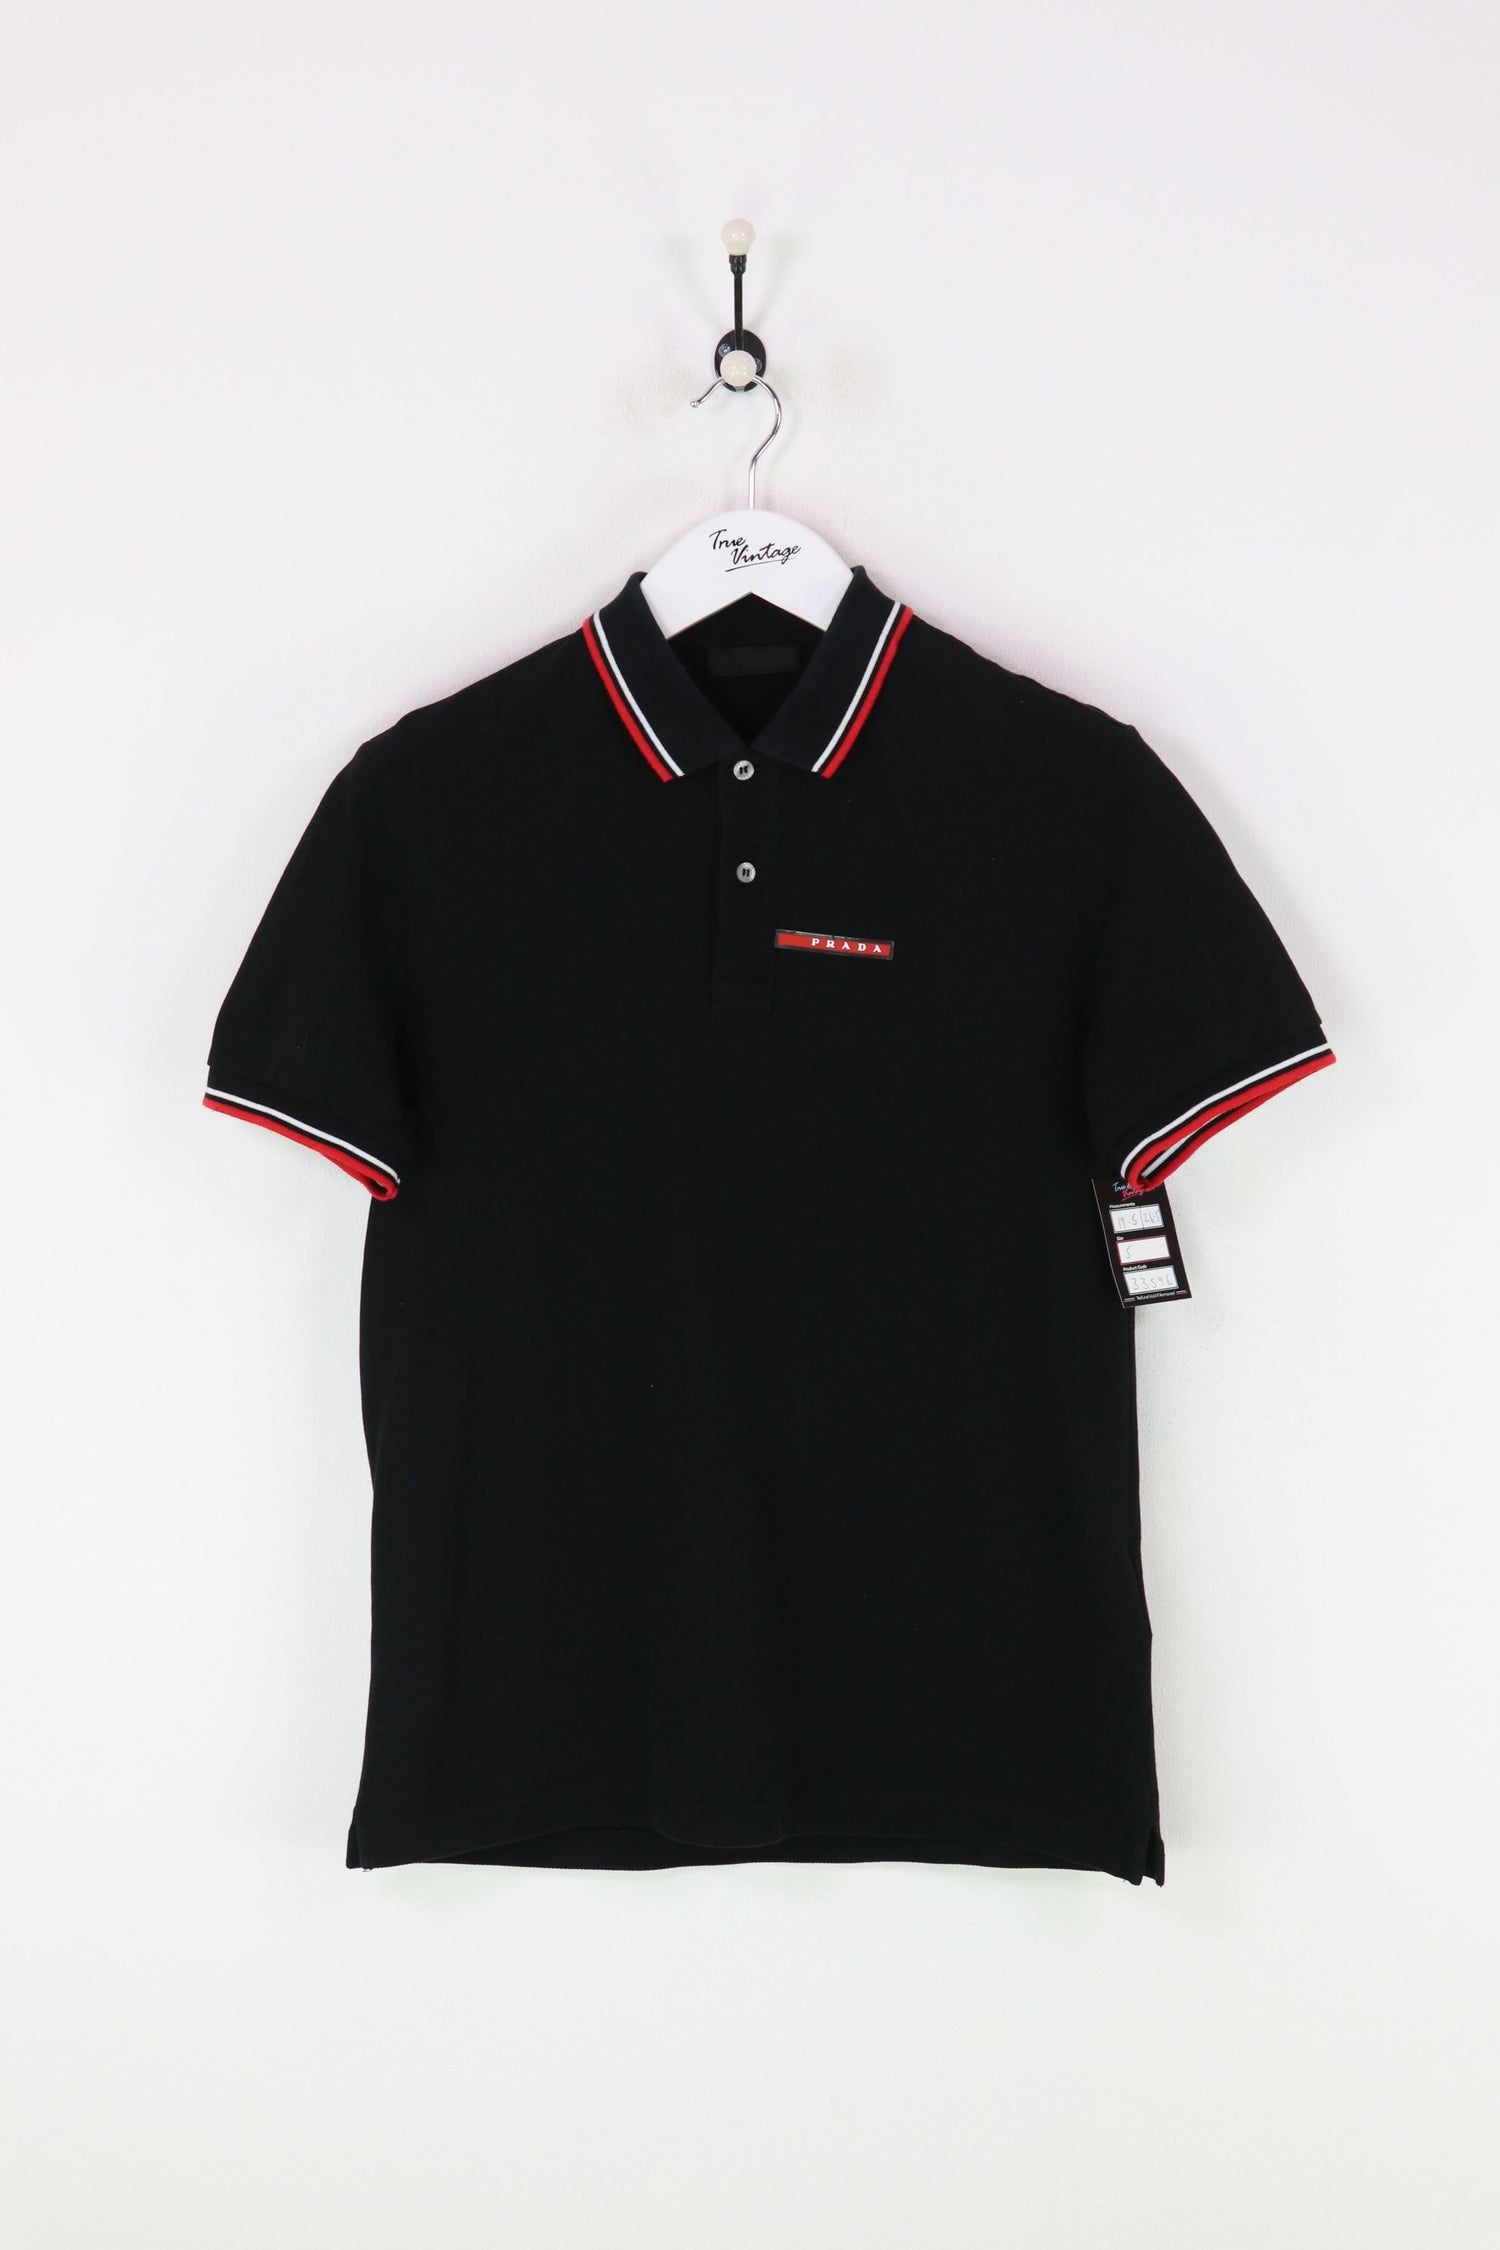 Prada Polo Shirt Black Small